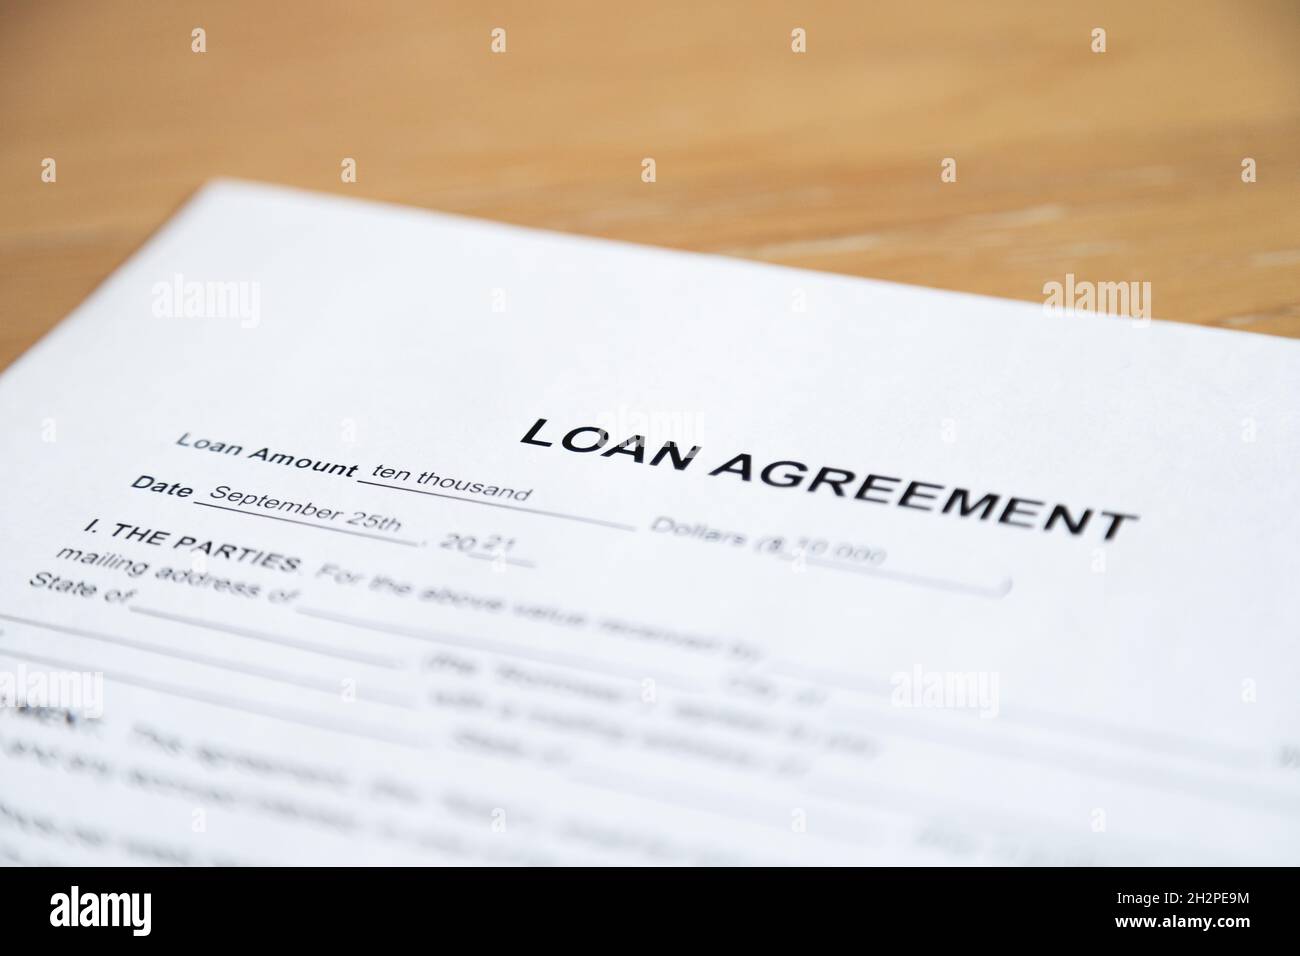 Loan agreement - prefilled paper ten thousand dollars Stock Photo